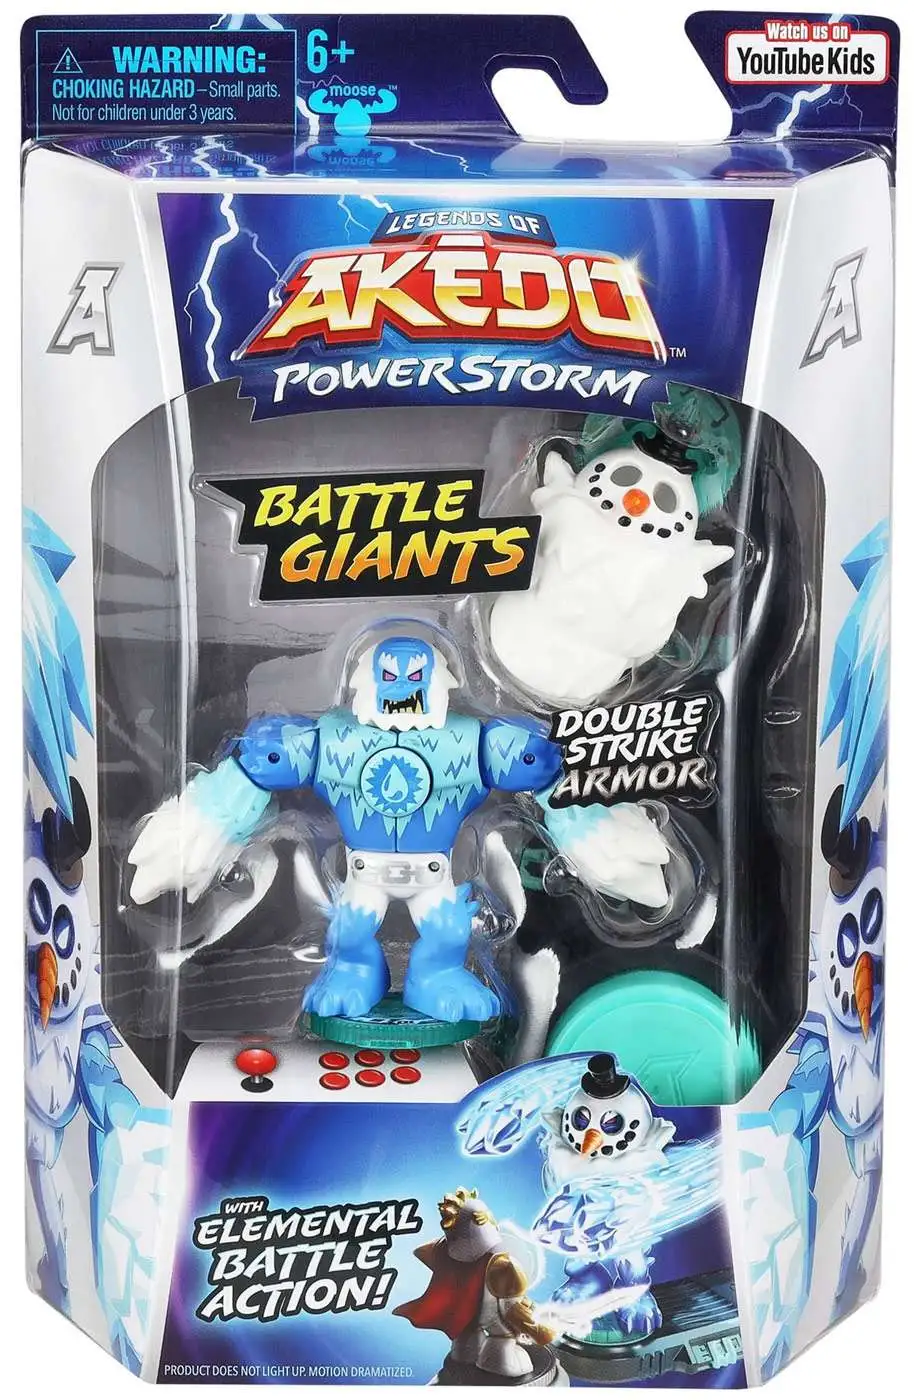 NEW* The Legends of Akedo Power Storm Versus Pack  Akedo Ultimate Arcade  Warriors Battle Giants 